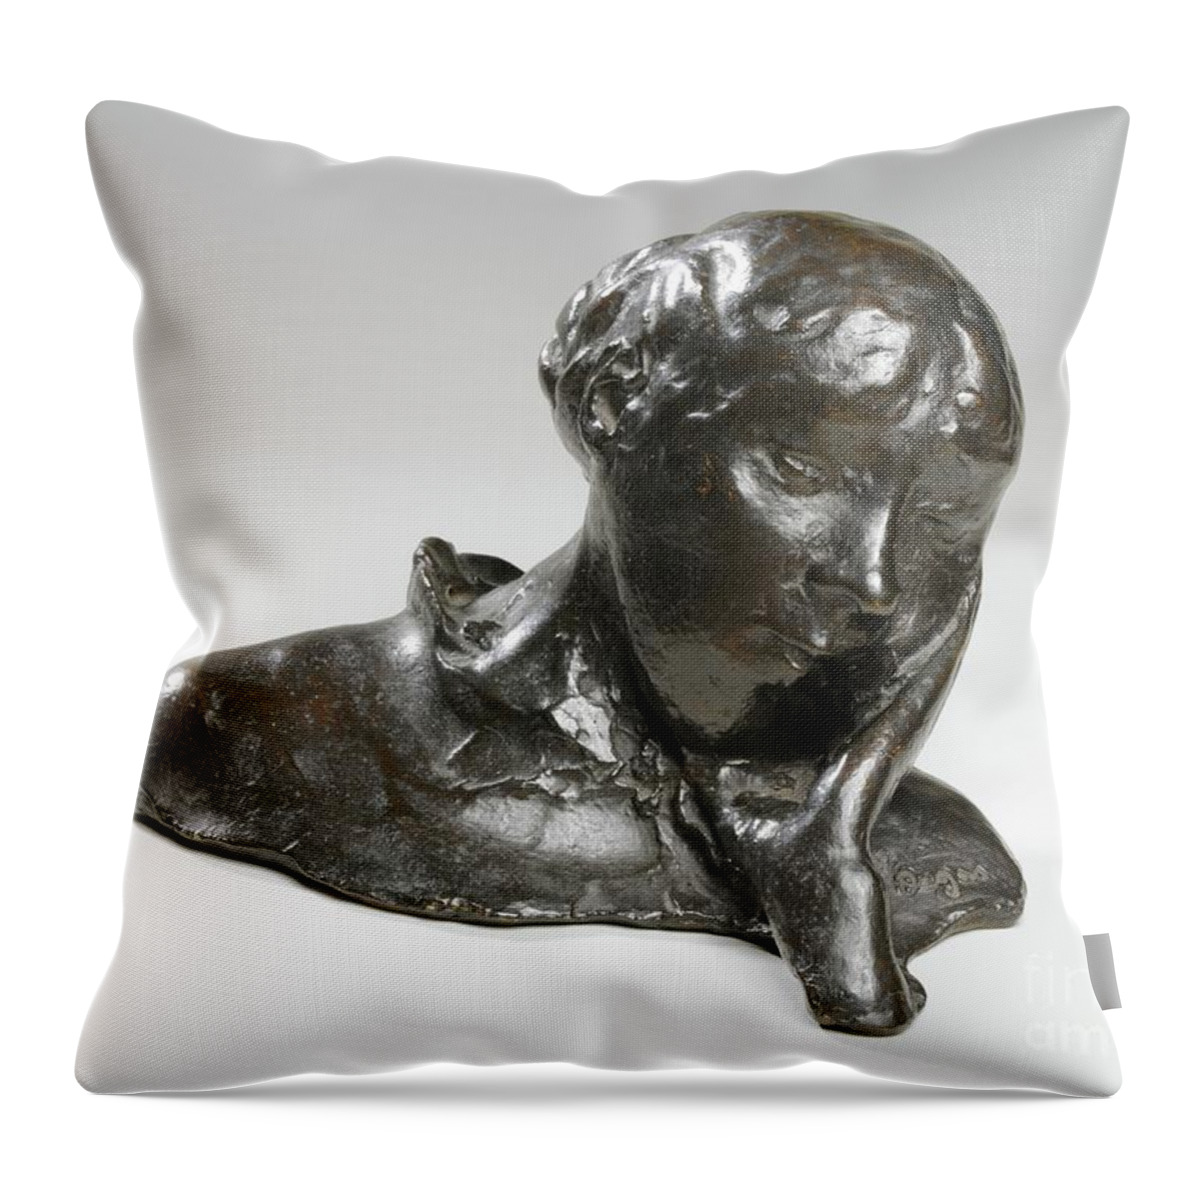 Edgar Throw Pillow featuring the photograph Portrait Of A Woman, Bronze by Edgar Degas